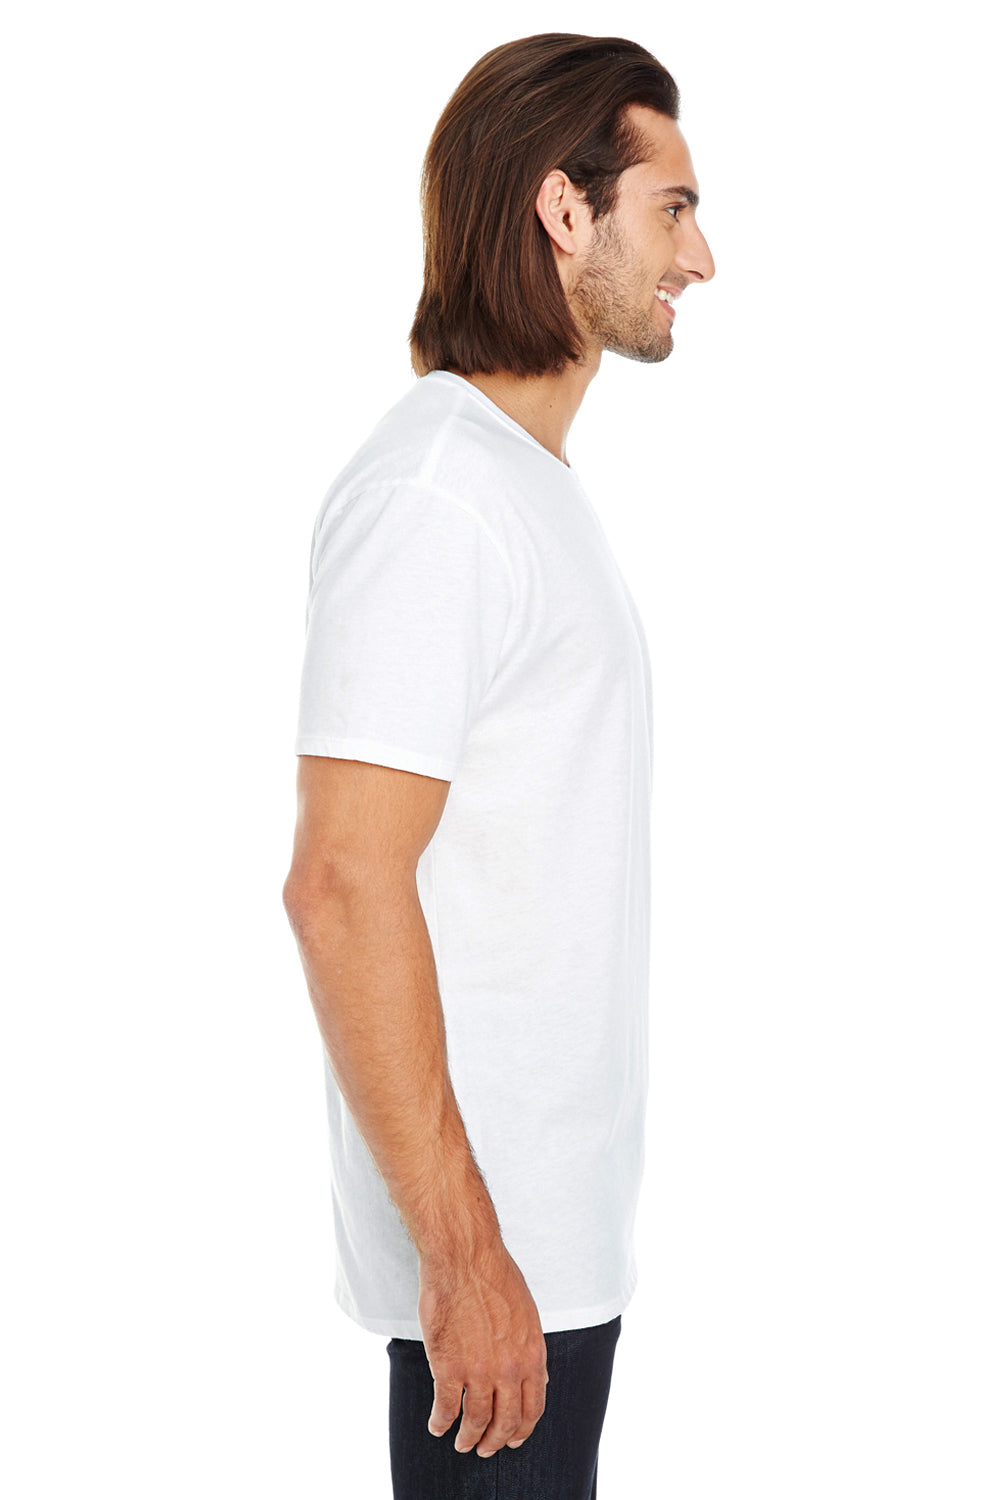 Threadfast Apparel 130A Mens Short Sleeve Crewneck T-Shirt White Side